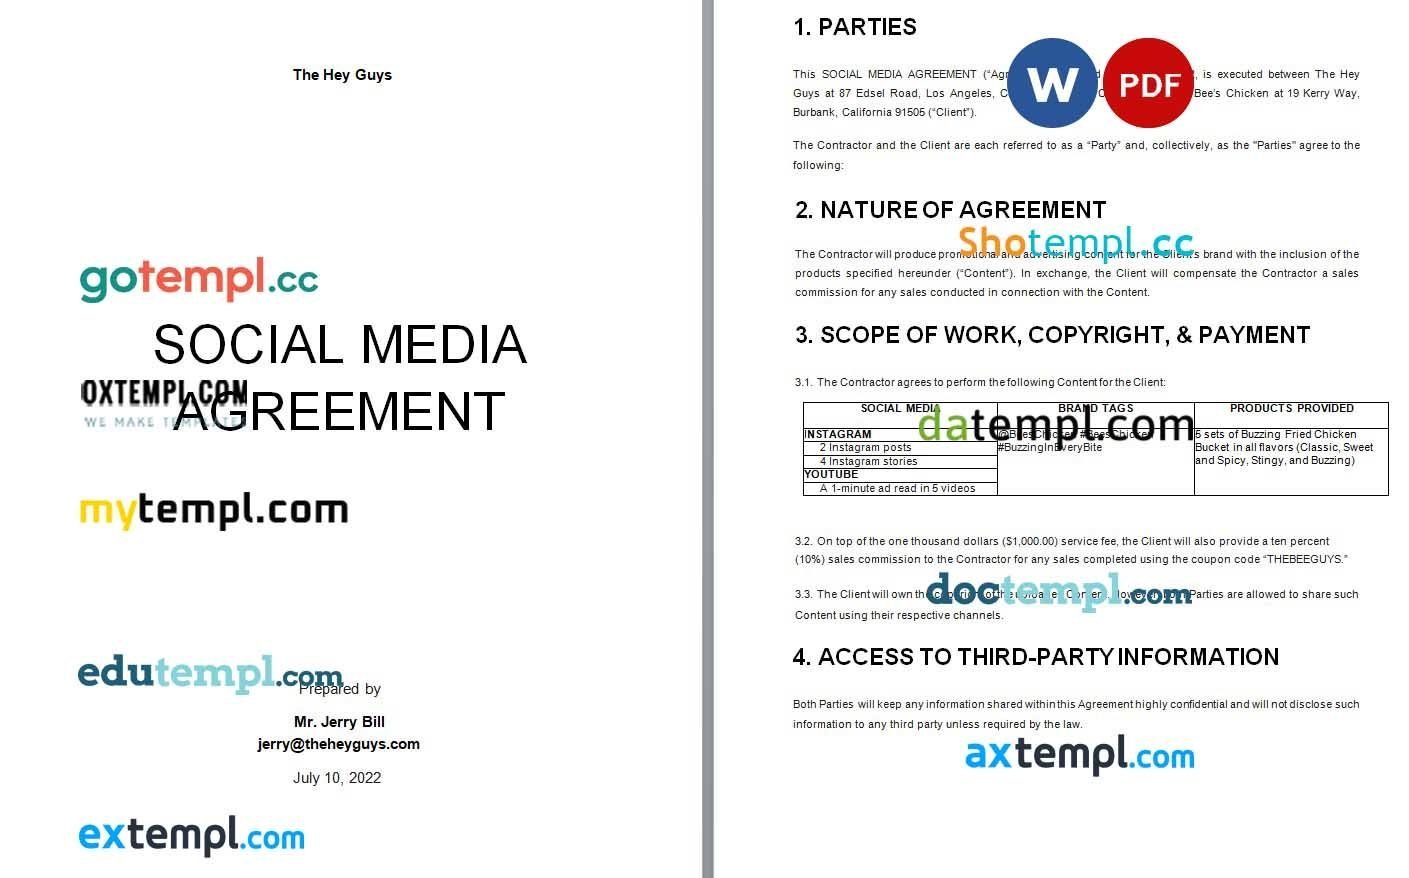 Copy of Social Media Agreement Word example, fully editable